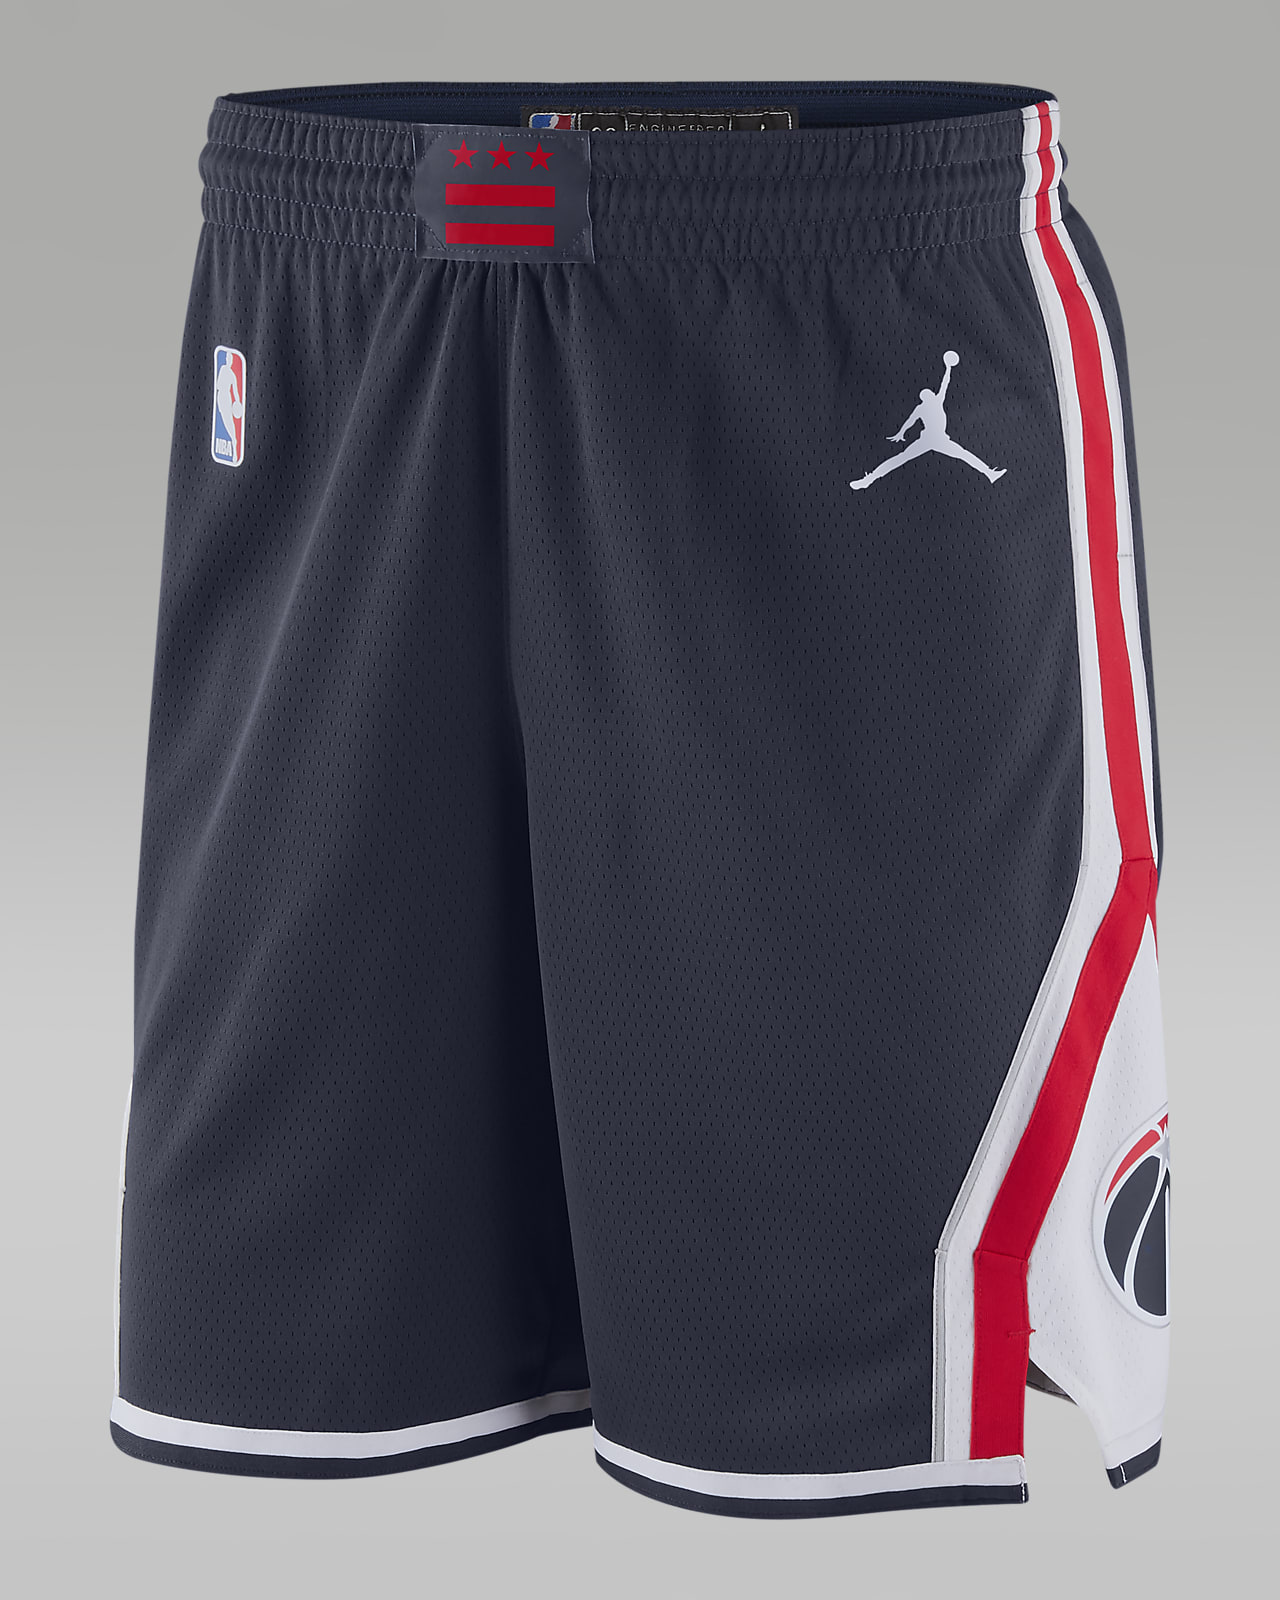 Nike CHICAGO BULLS NBA Swingman Shorts Red - UNIVERSITY RED/WHITE/WHITE